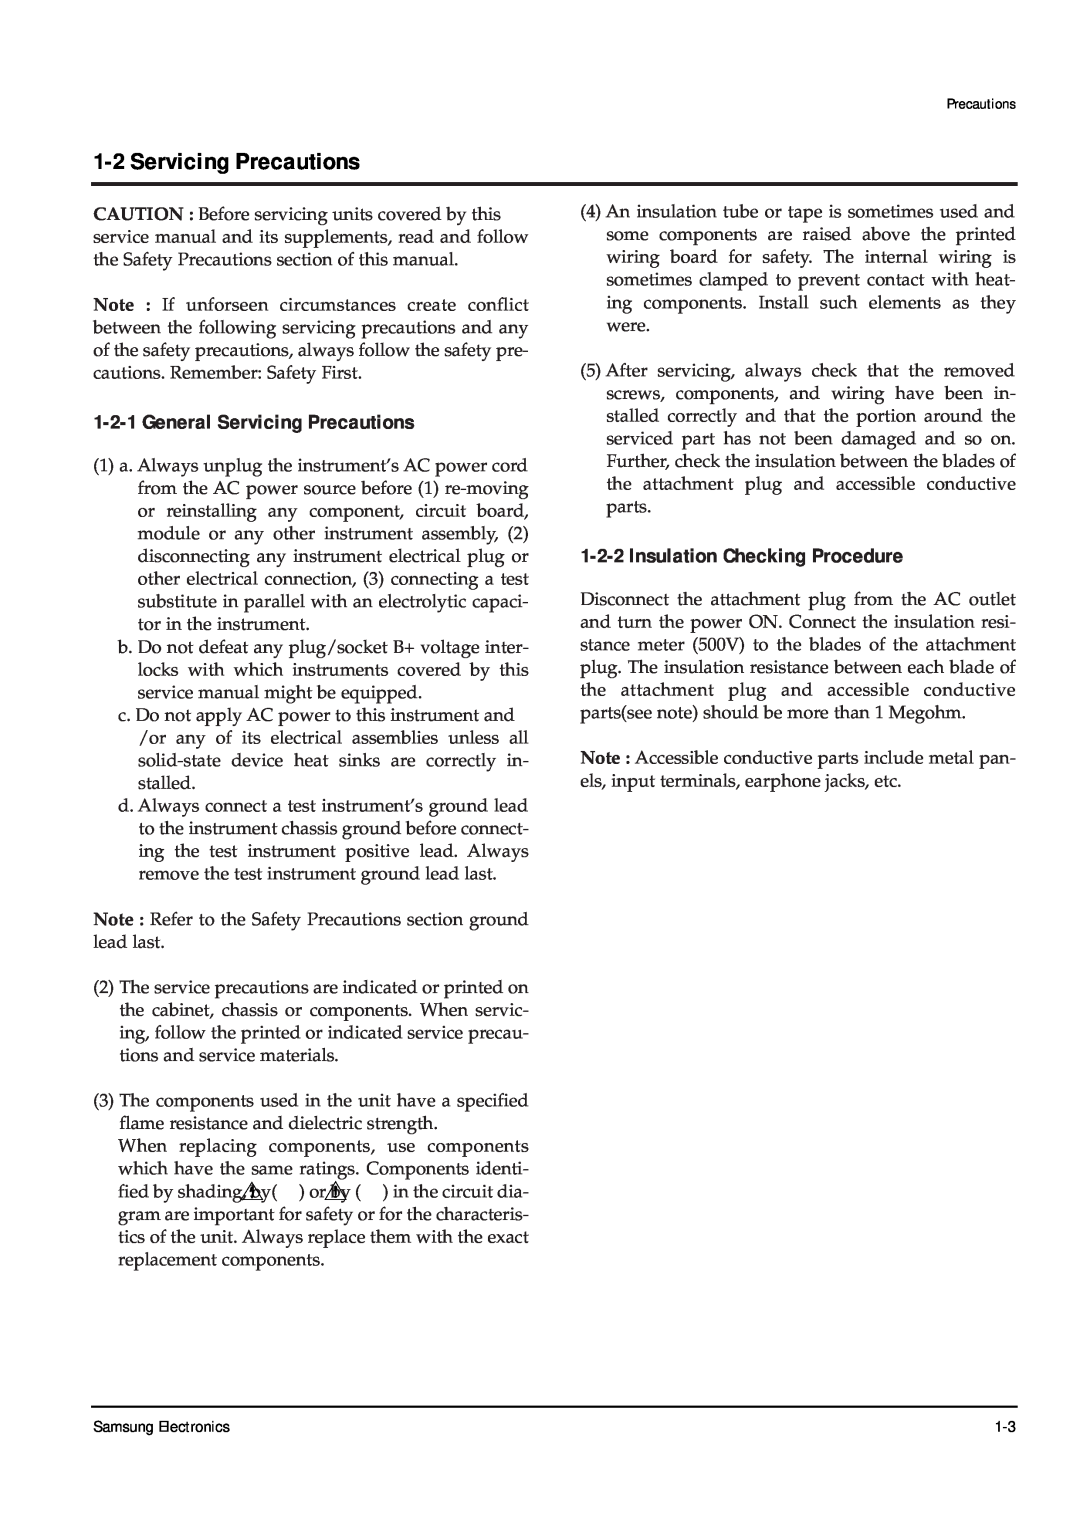 Samsung DVD-L200W service manual General Servicing Precautions, Insulation Checking Procedure 